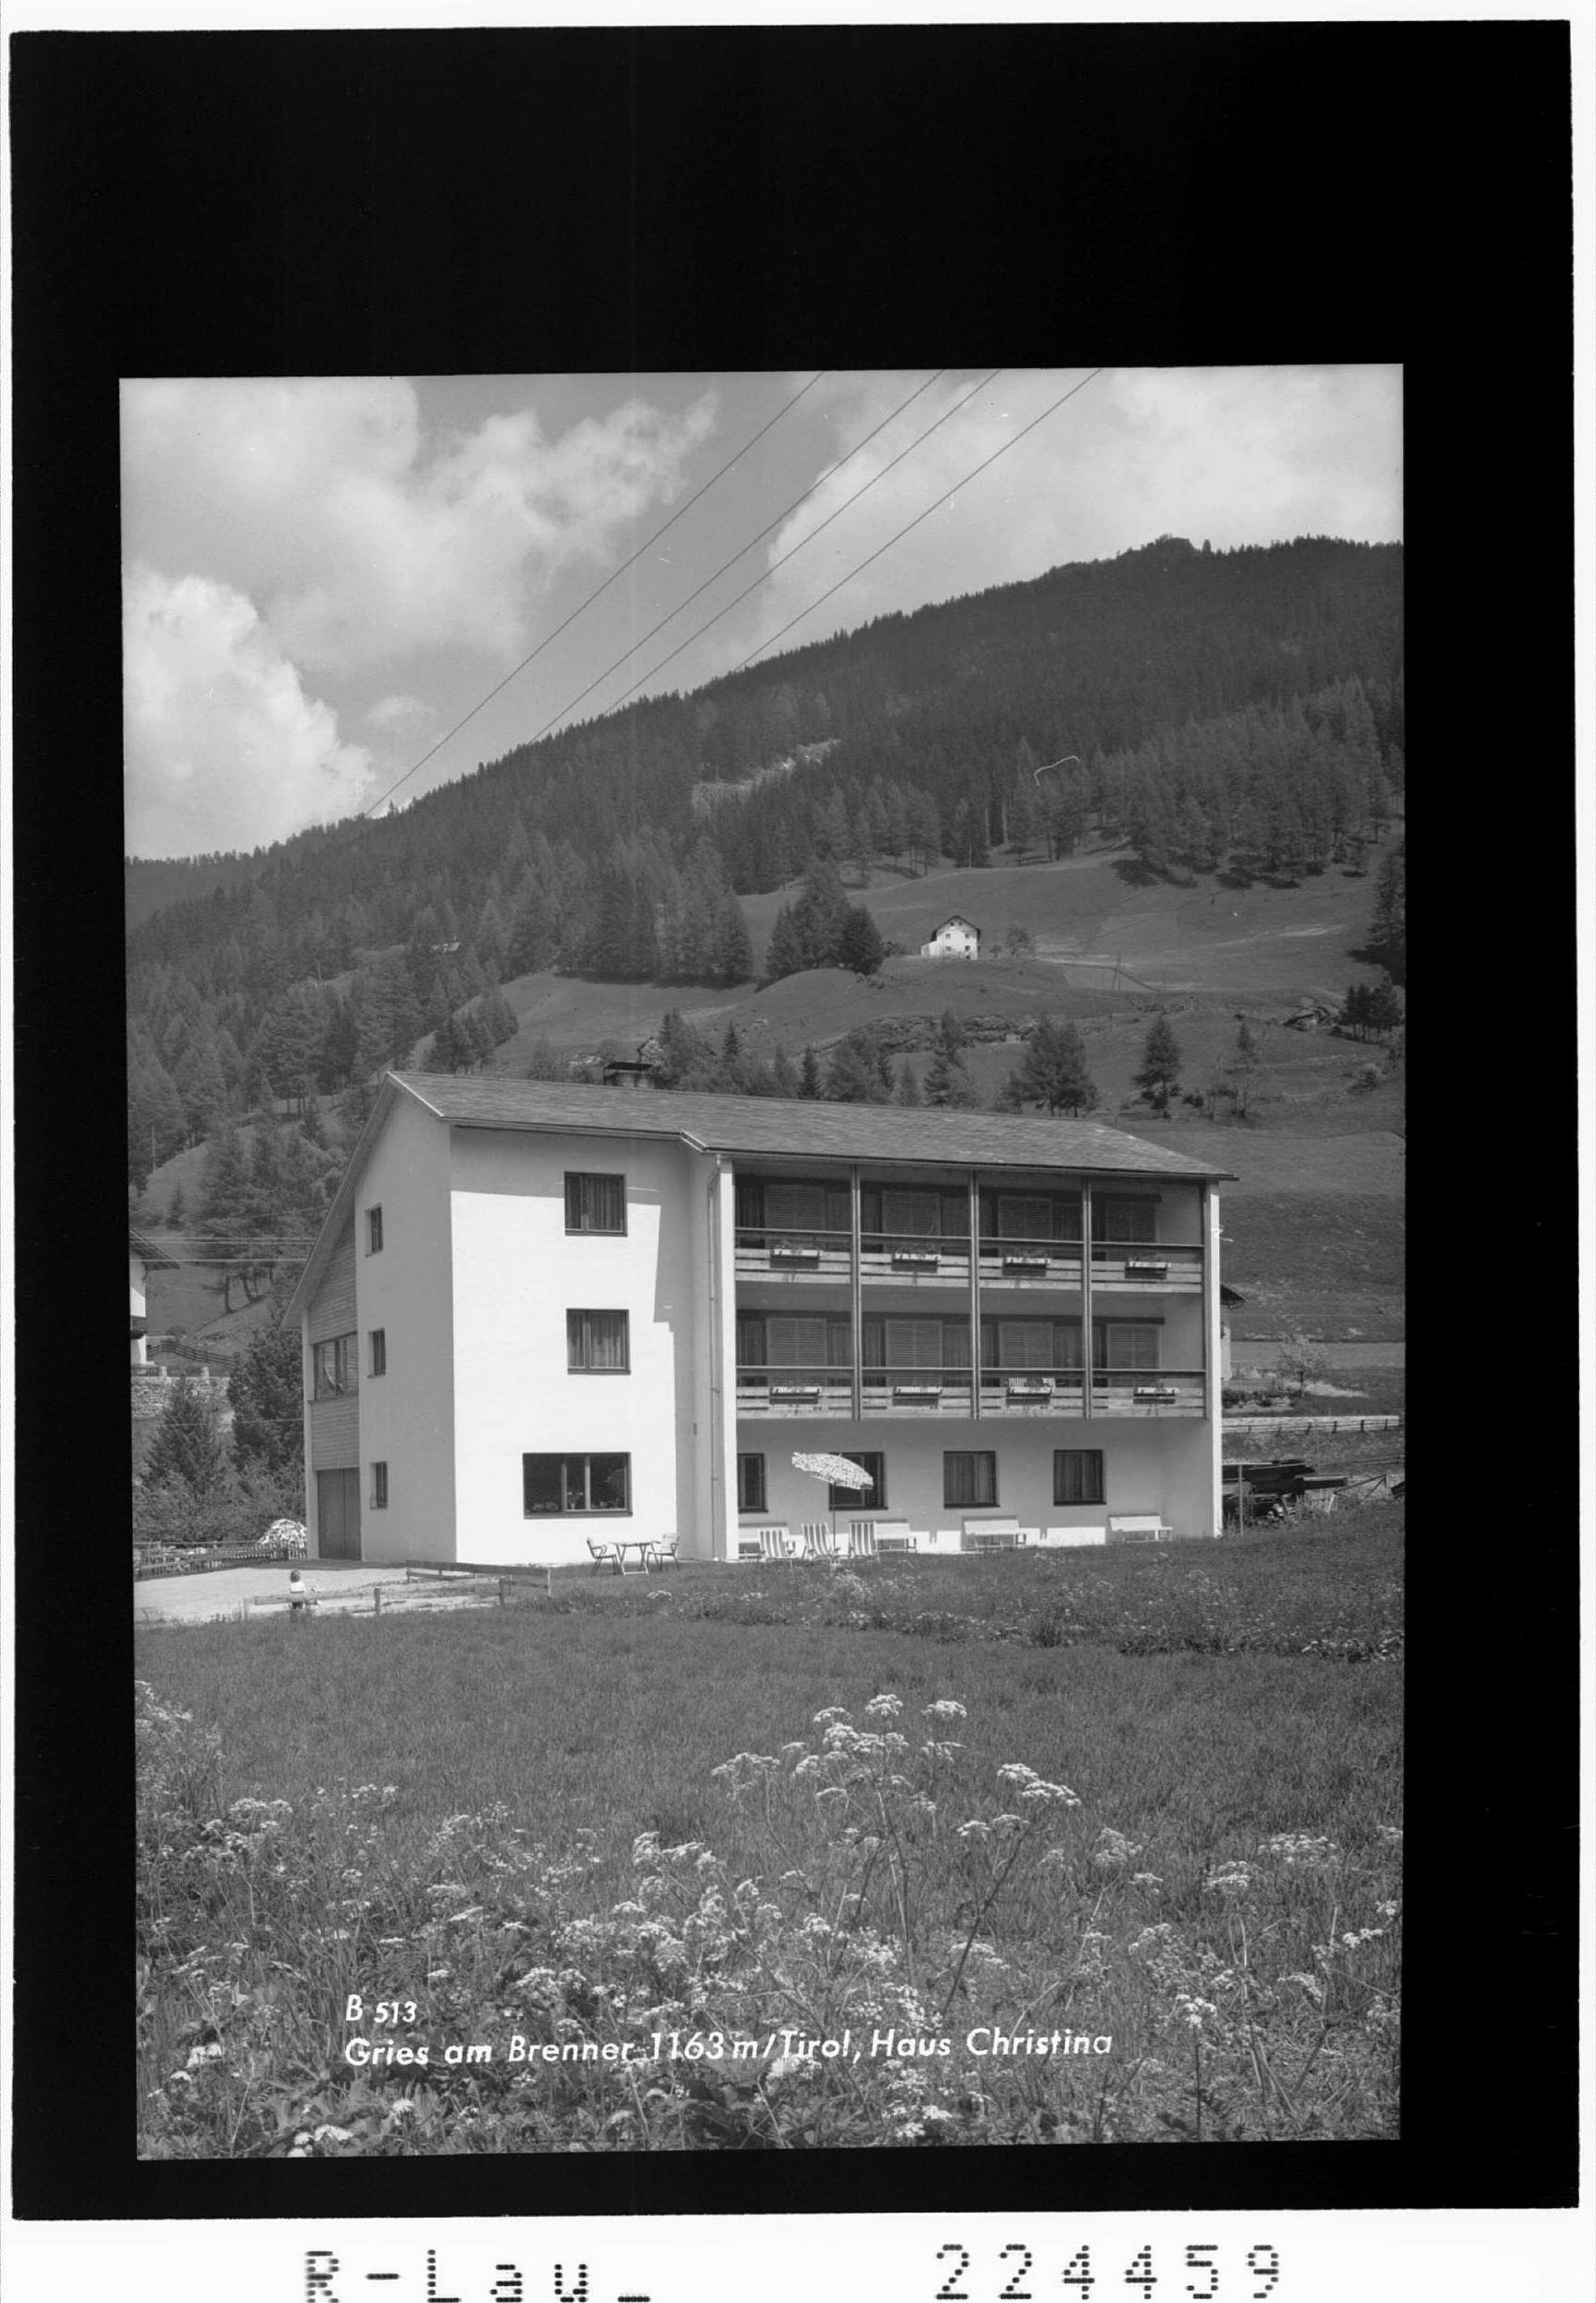 Gries am Brenner 1163 m / Tirol / Haus Christina></div>


    <hr>
    <div class=